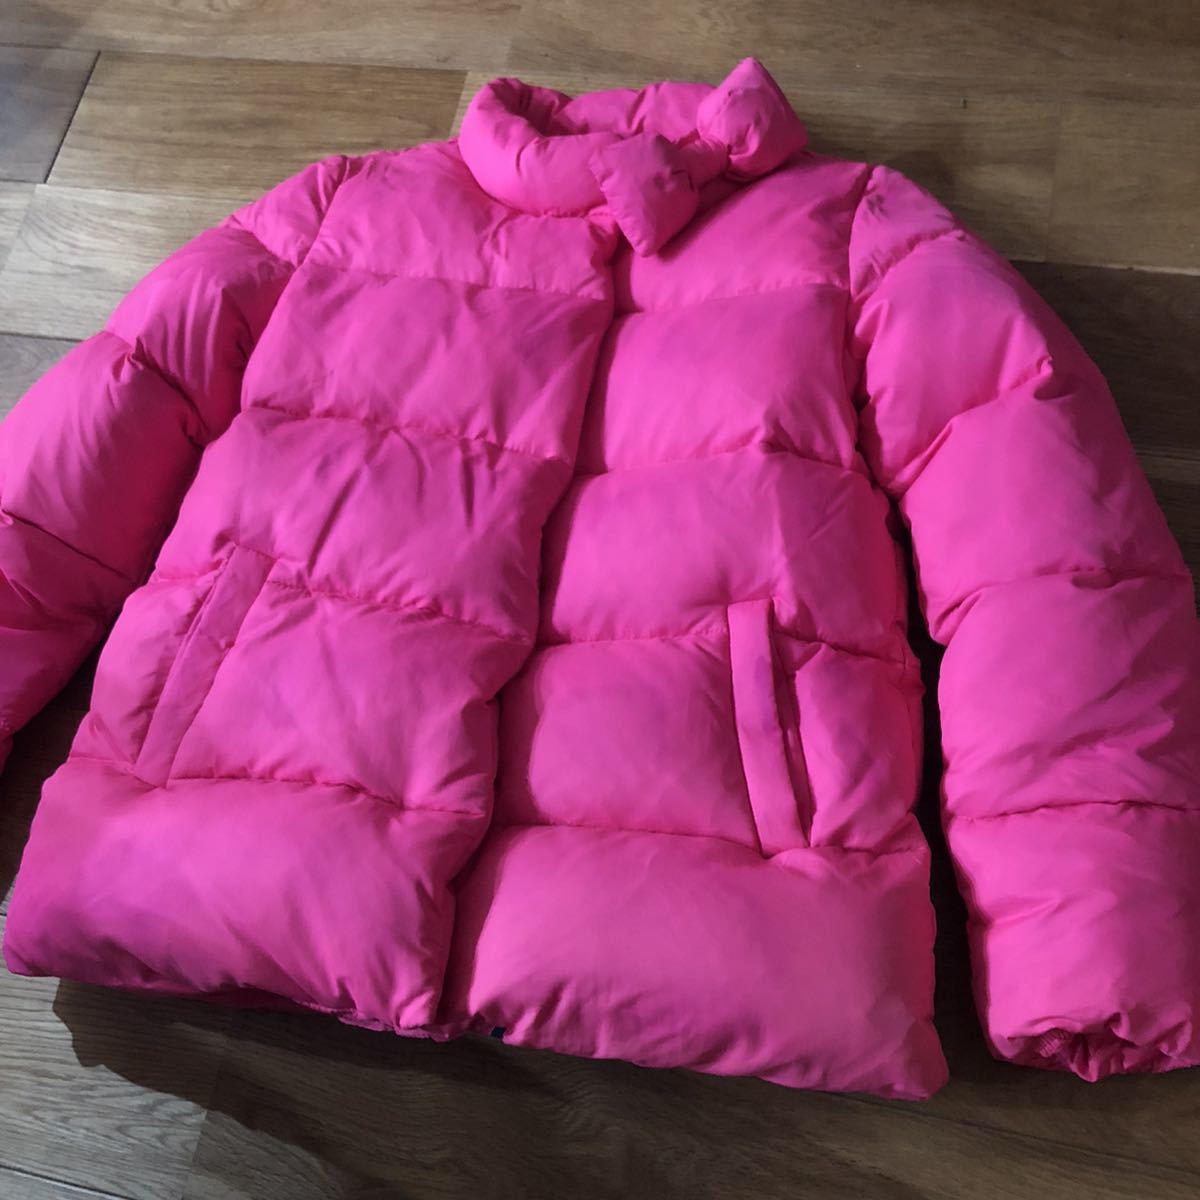 kate spade NEW YORK × GapKids ダウンジャケット L 140 新品 未使用 ピンク 入手困難モデル キッズ 女の子 コート ケイトスペード 極暖